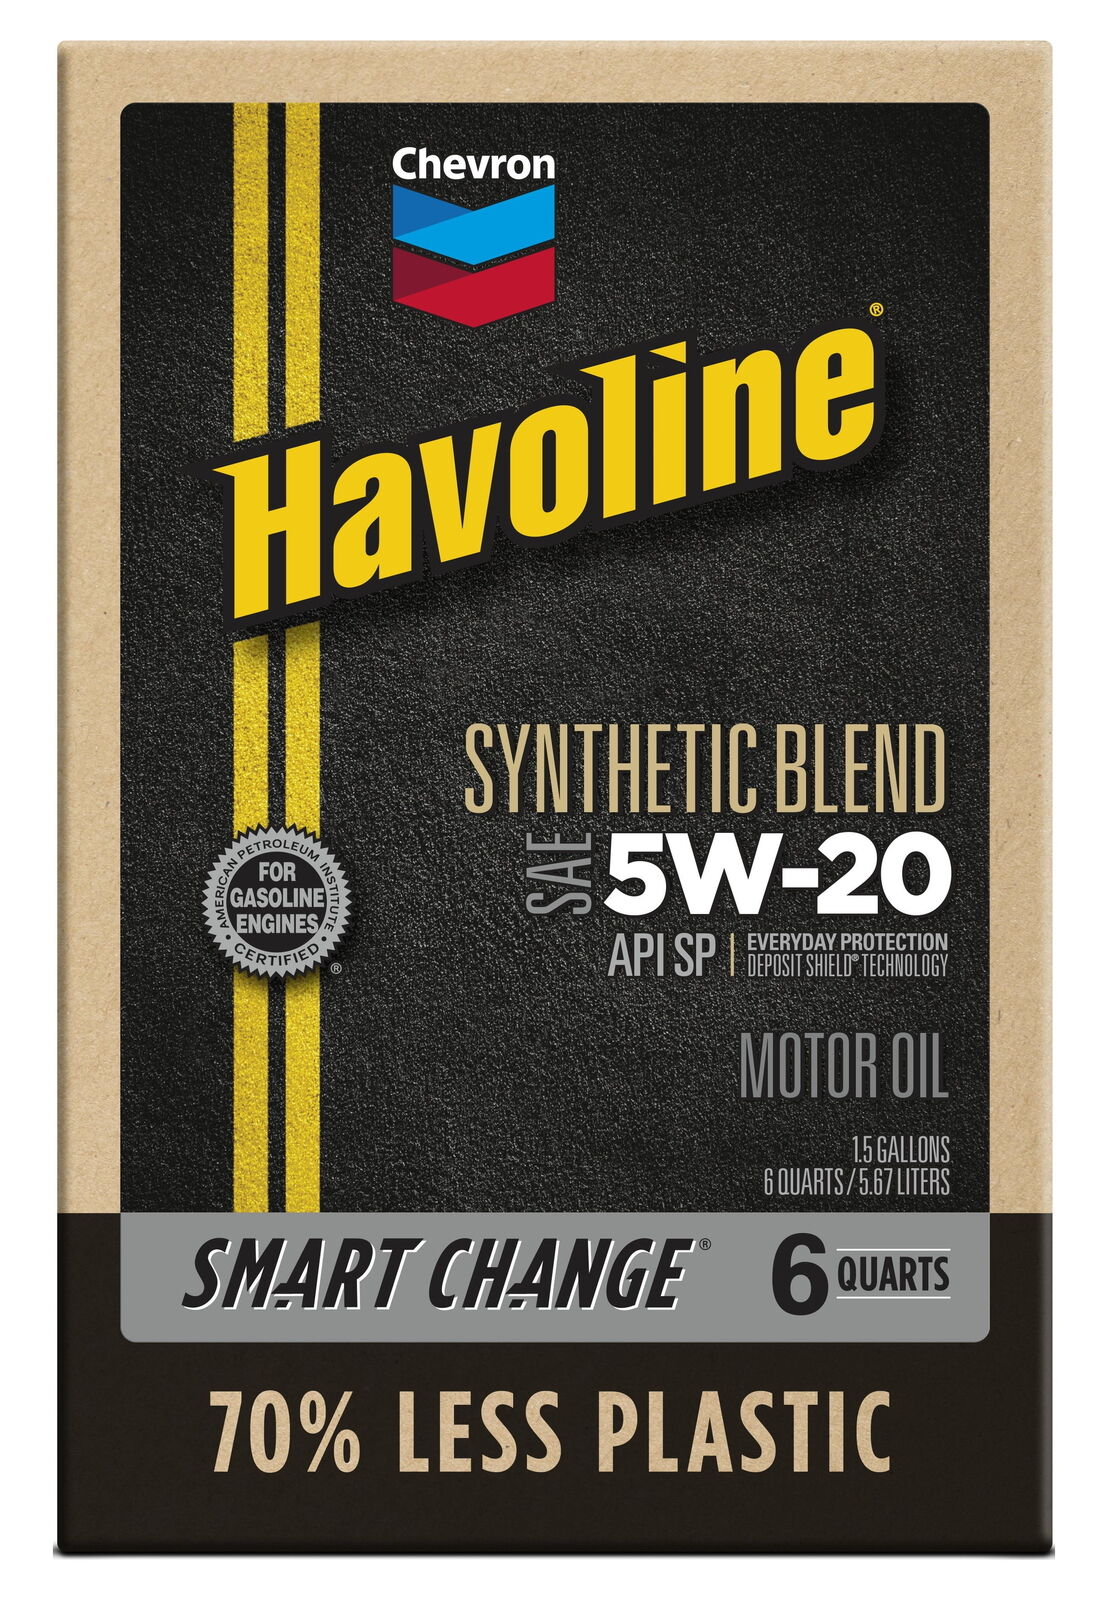 Chevron Havoline Synthetic Blend Motor Oil 5W-20, 6 Quart, Smart Change Box